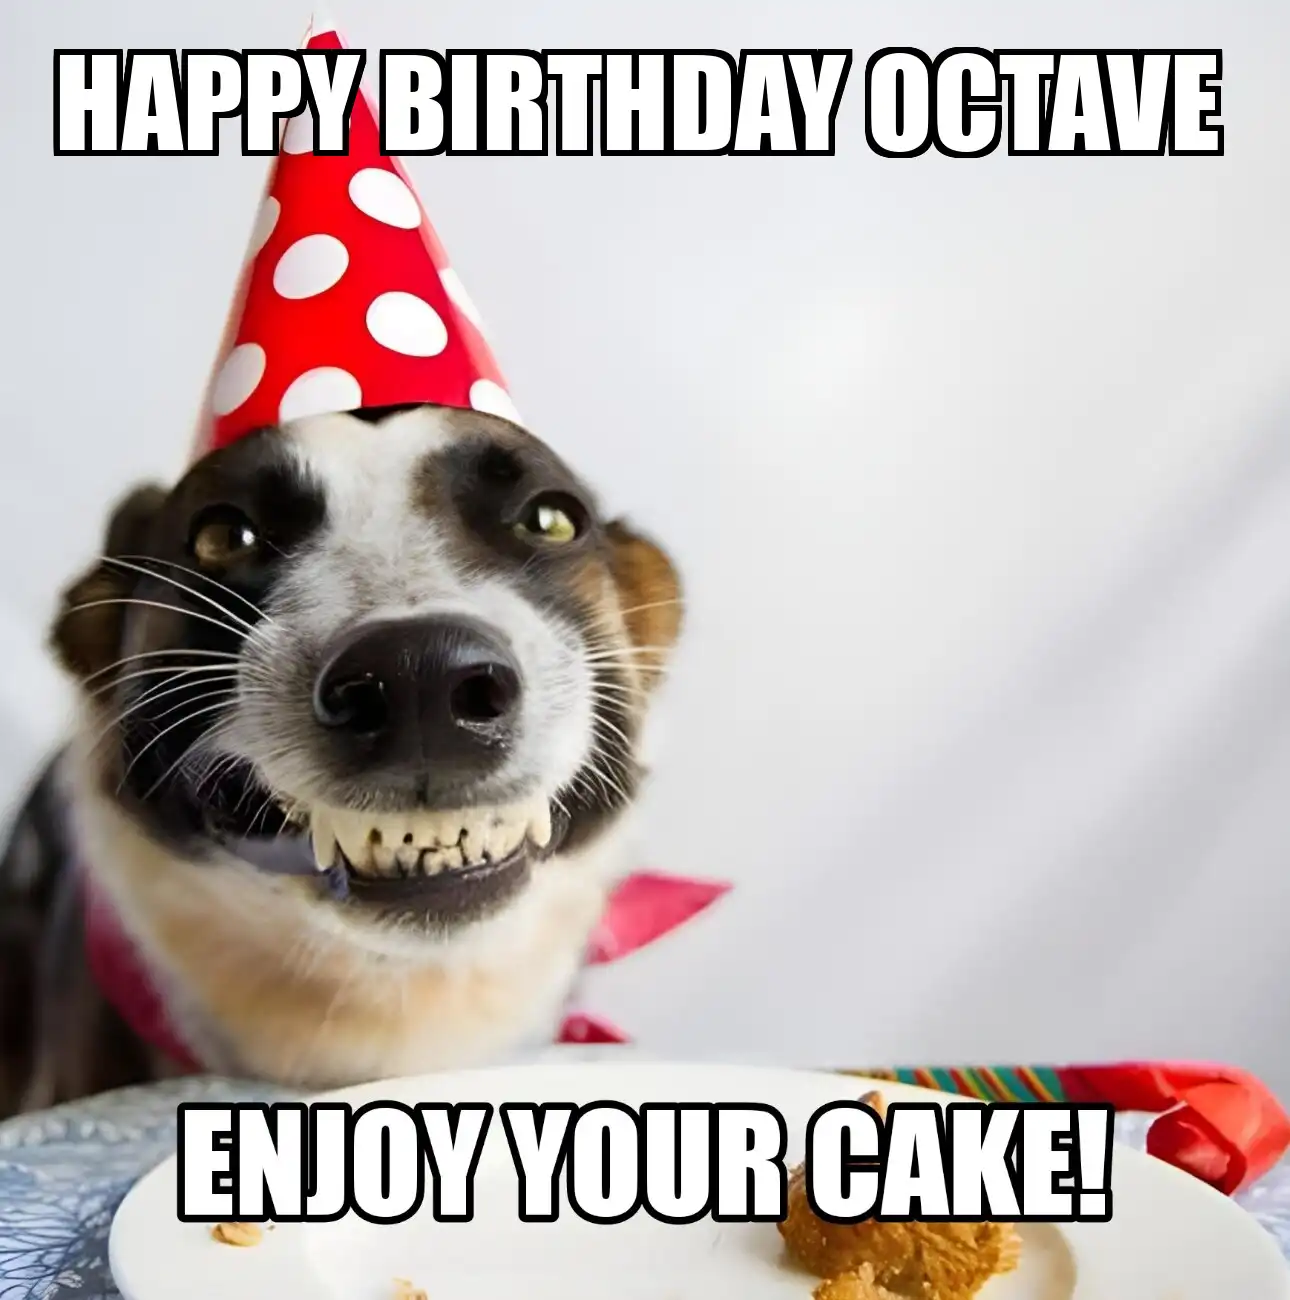 Happy Birthday Octave Enjoy Your Cake Dog Meme